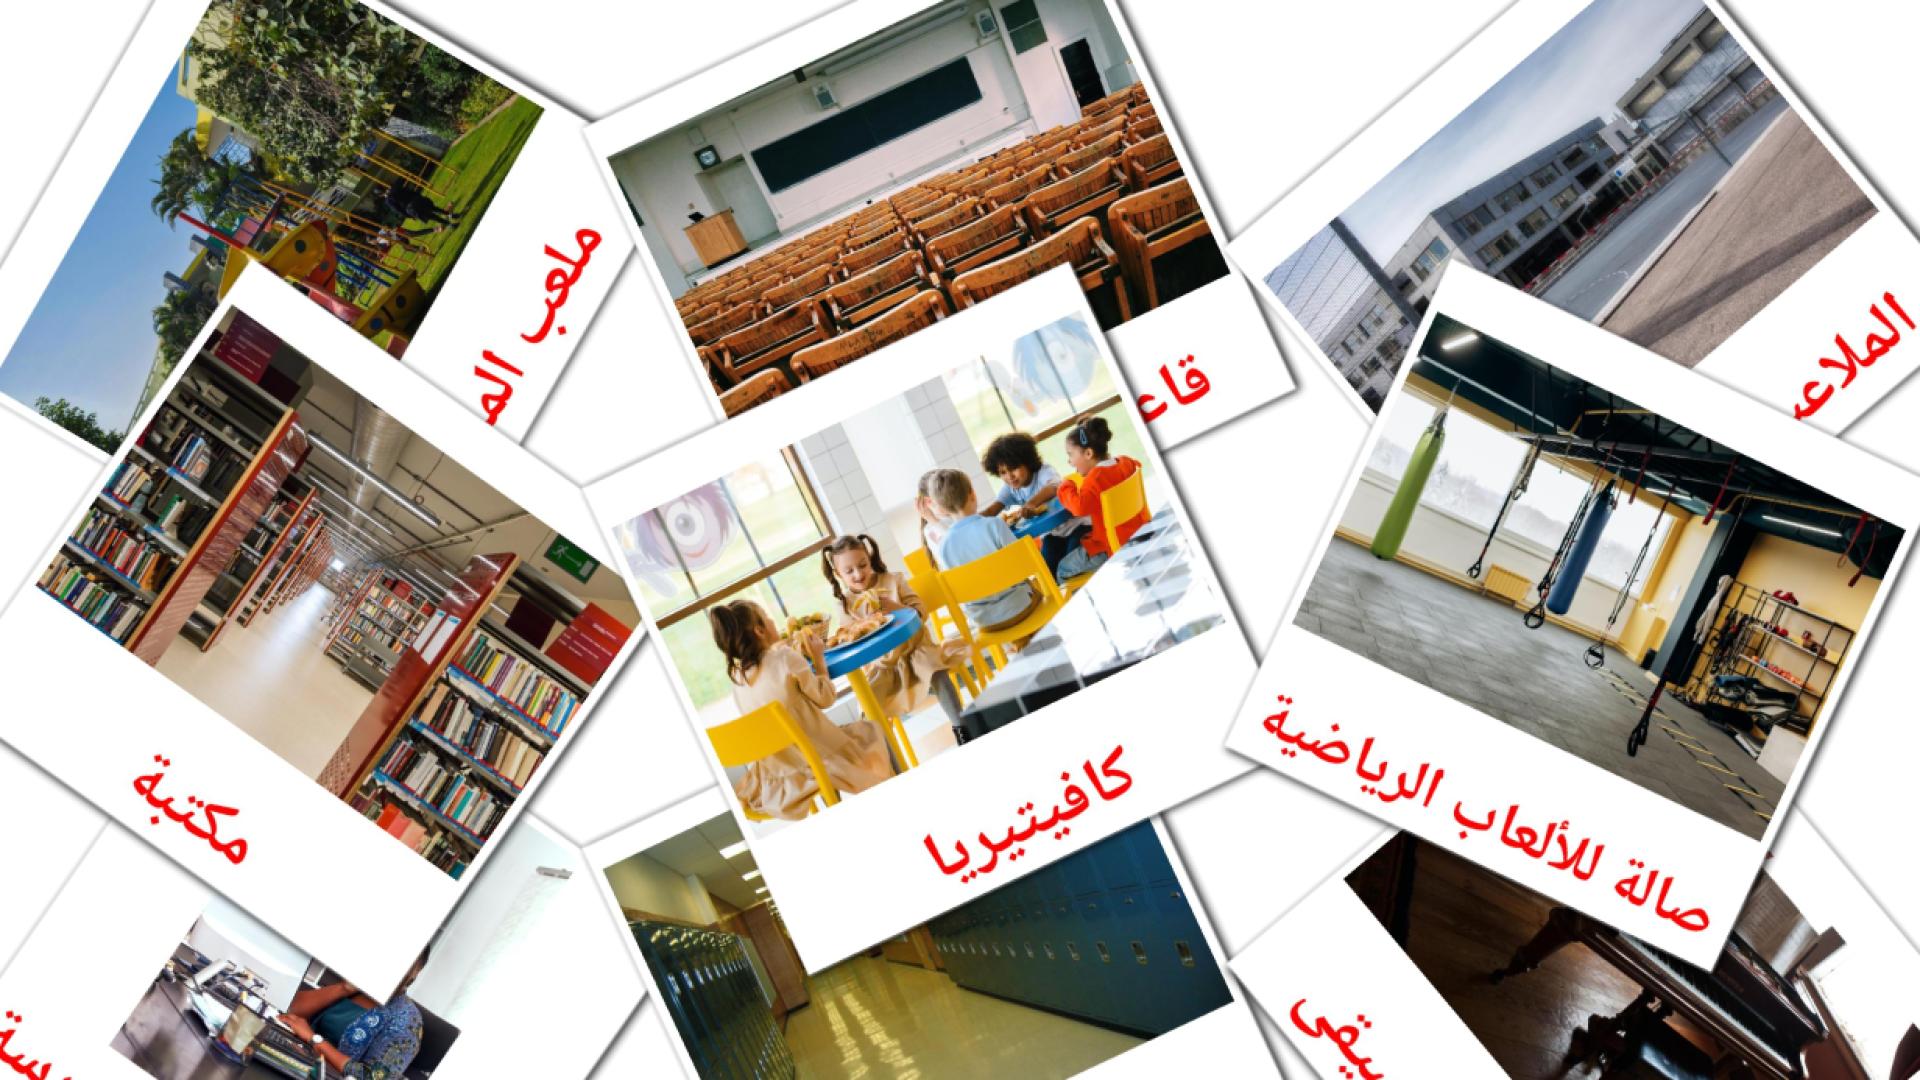 School building - arabic vocabulary cards